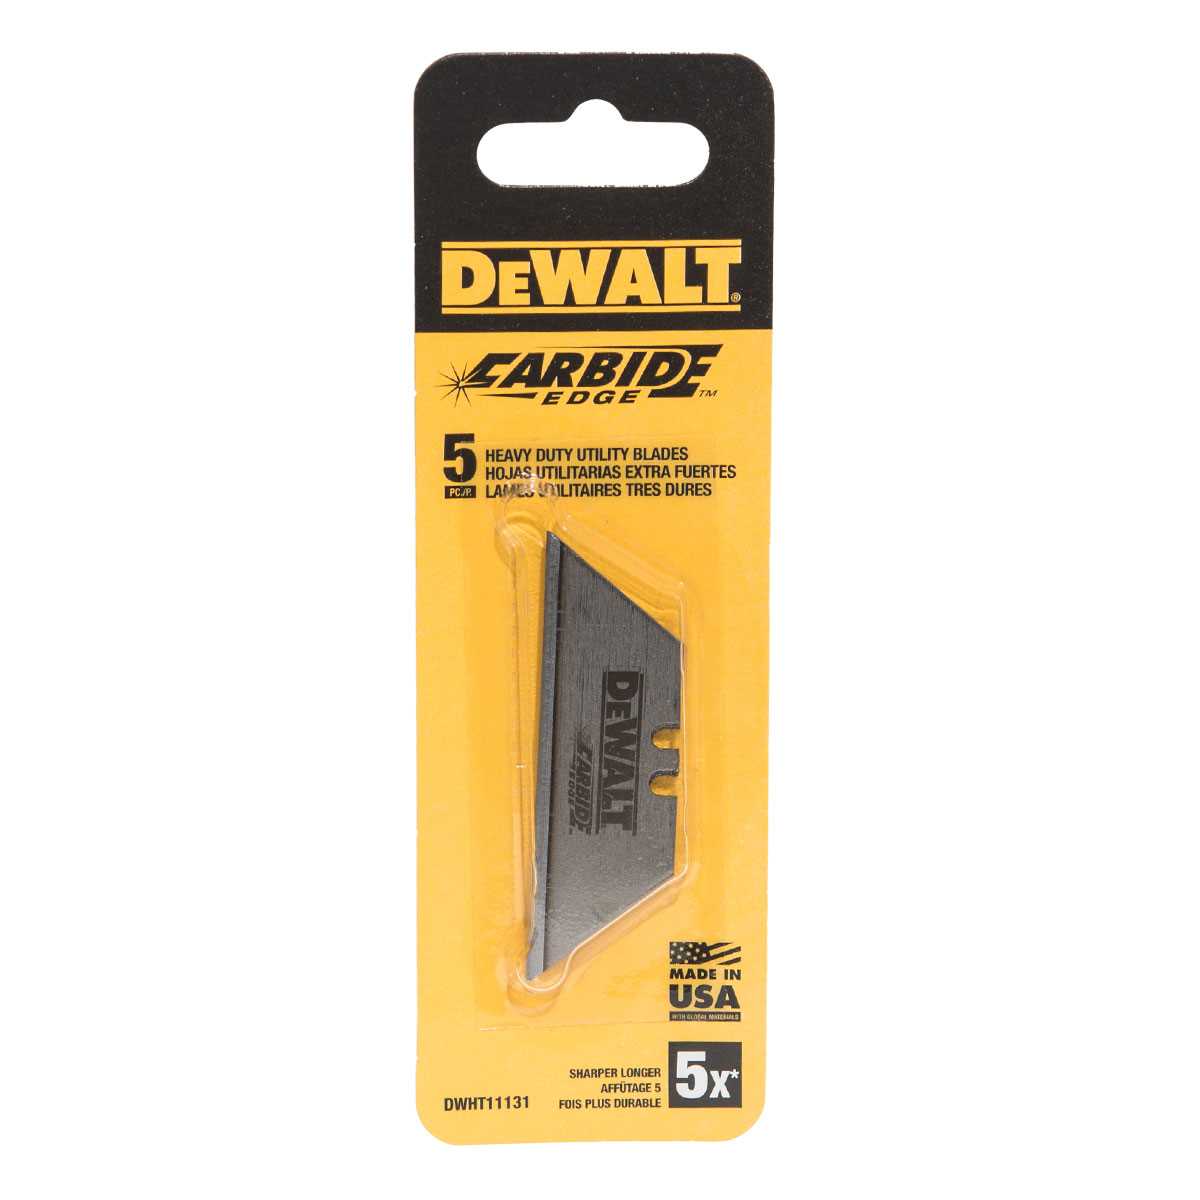 DeWalt Carbide Edge Utility Blades